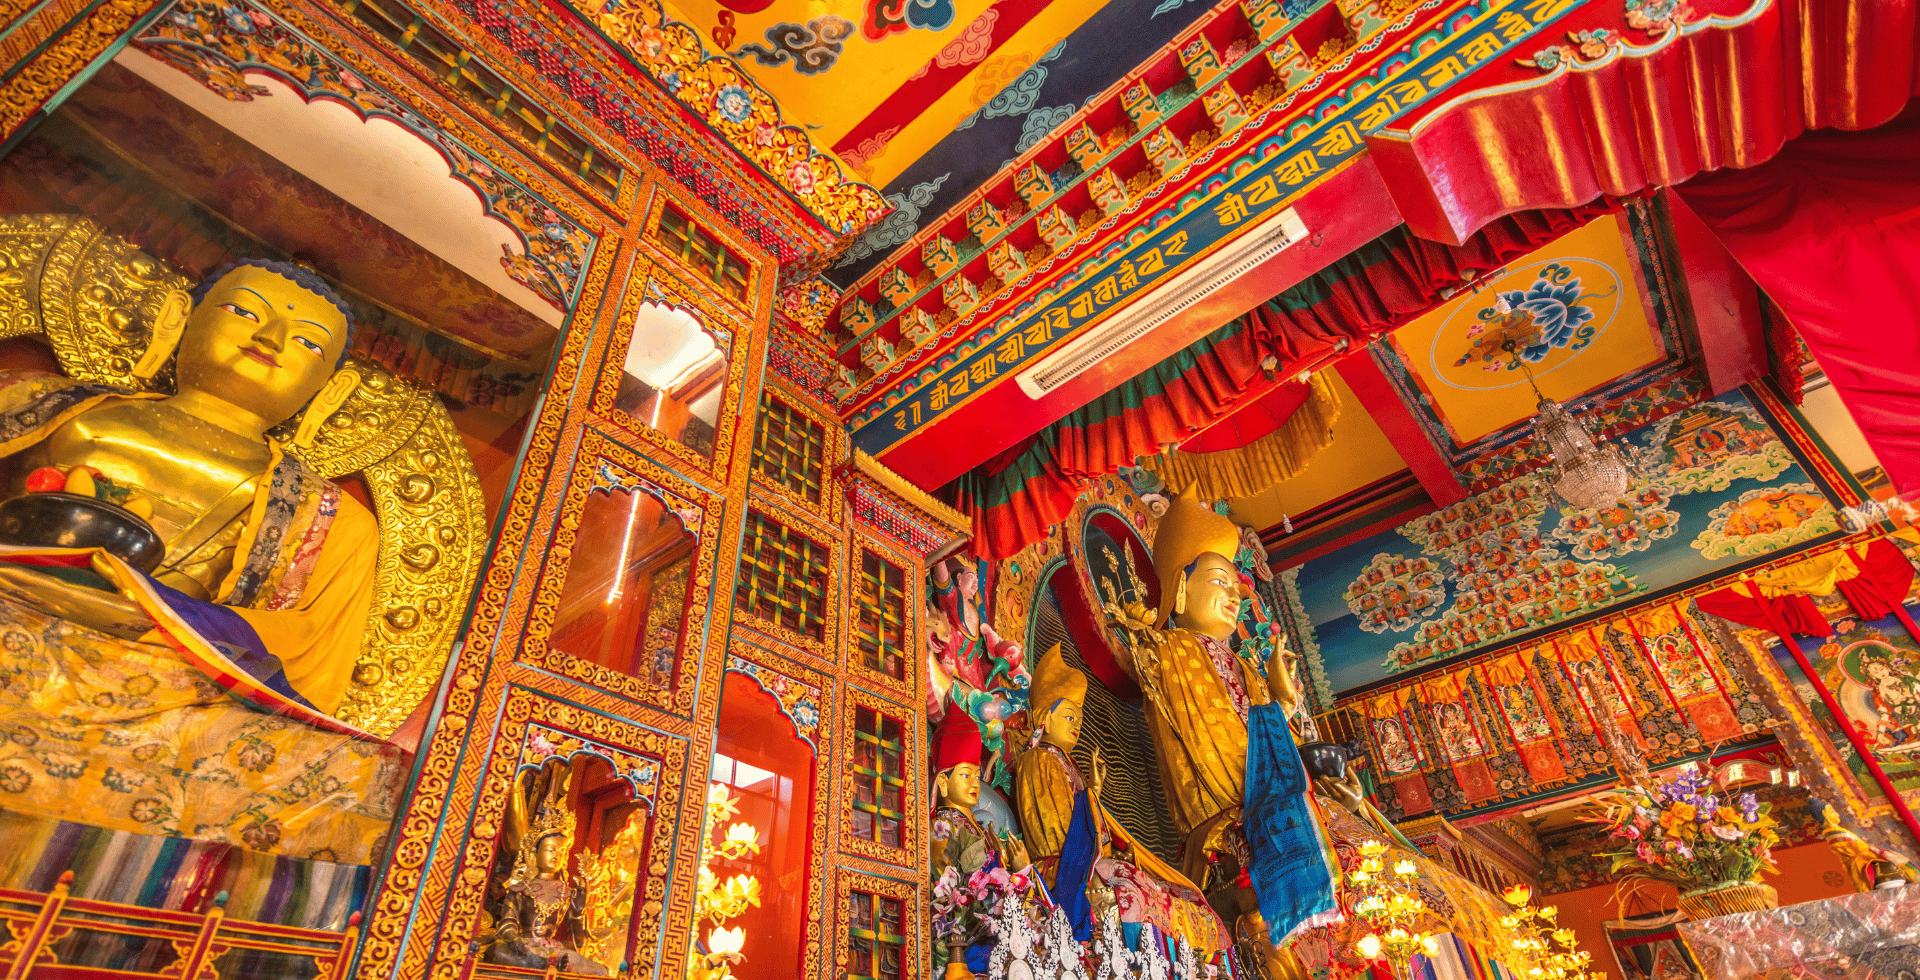 Inside Kopan Monastery, thangka and Buddha statues